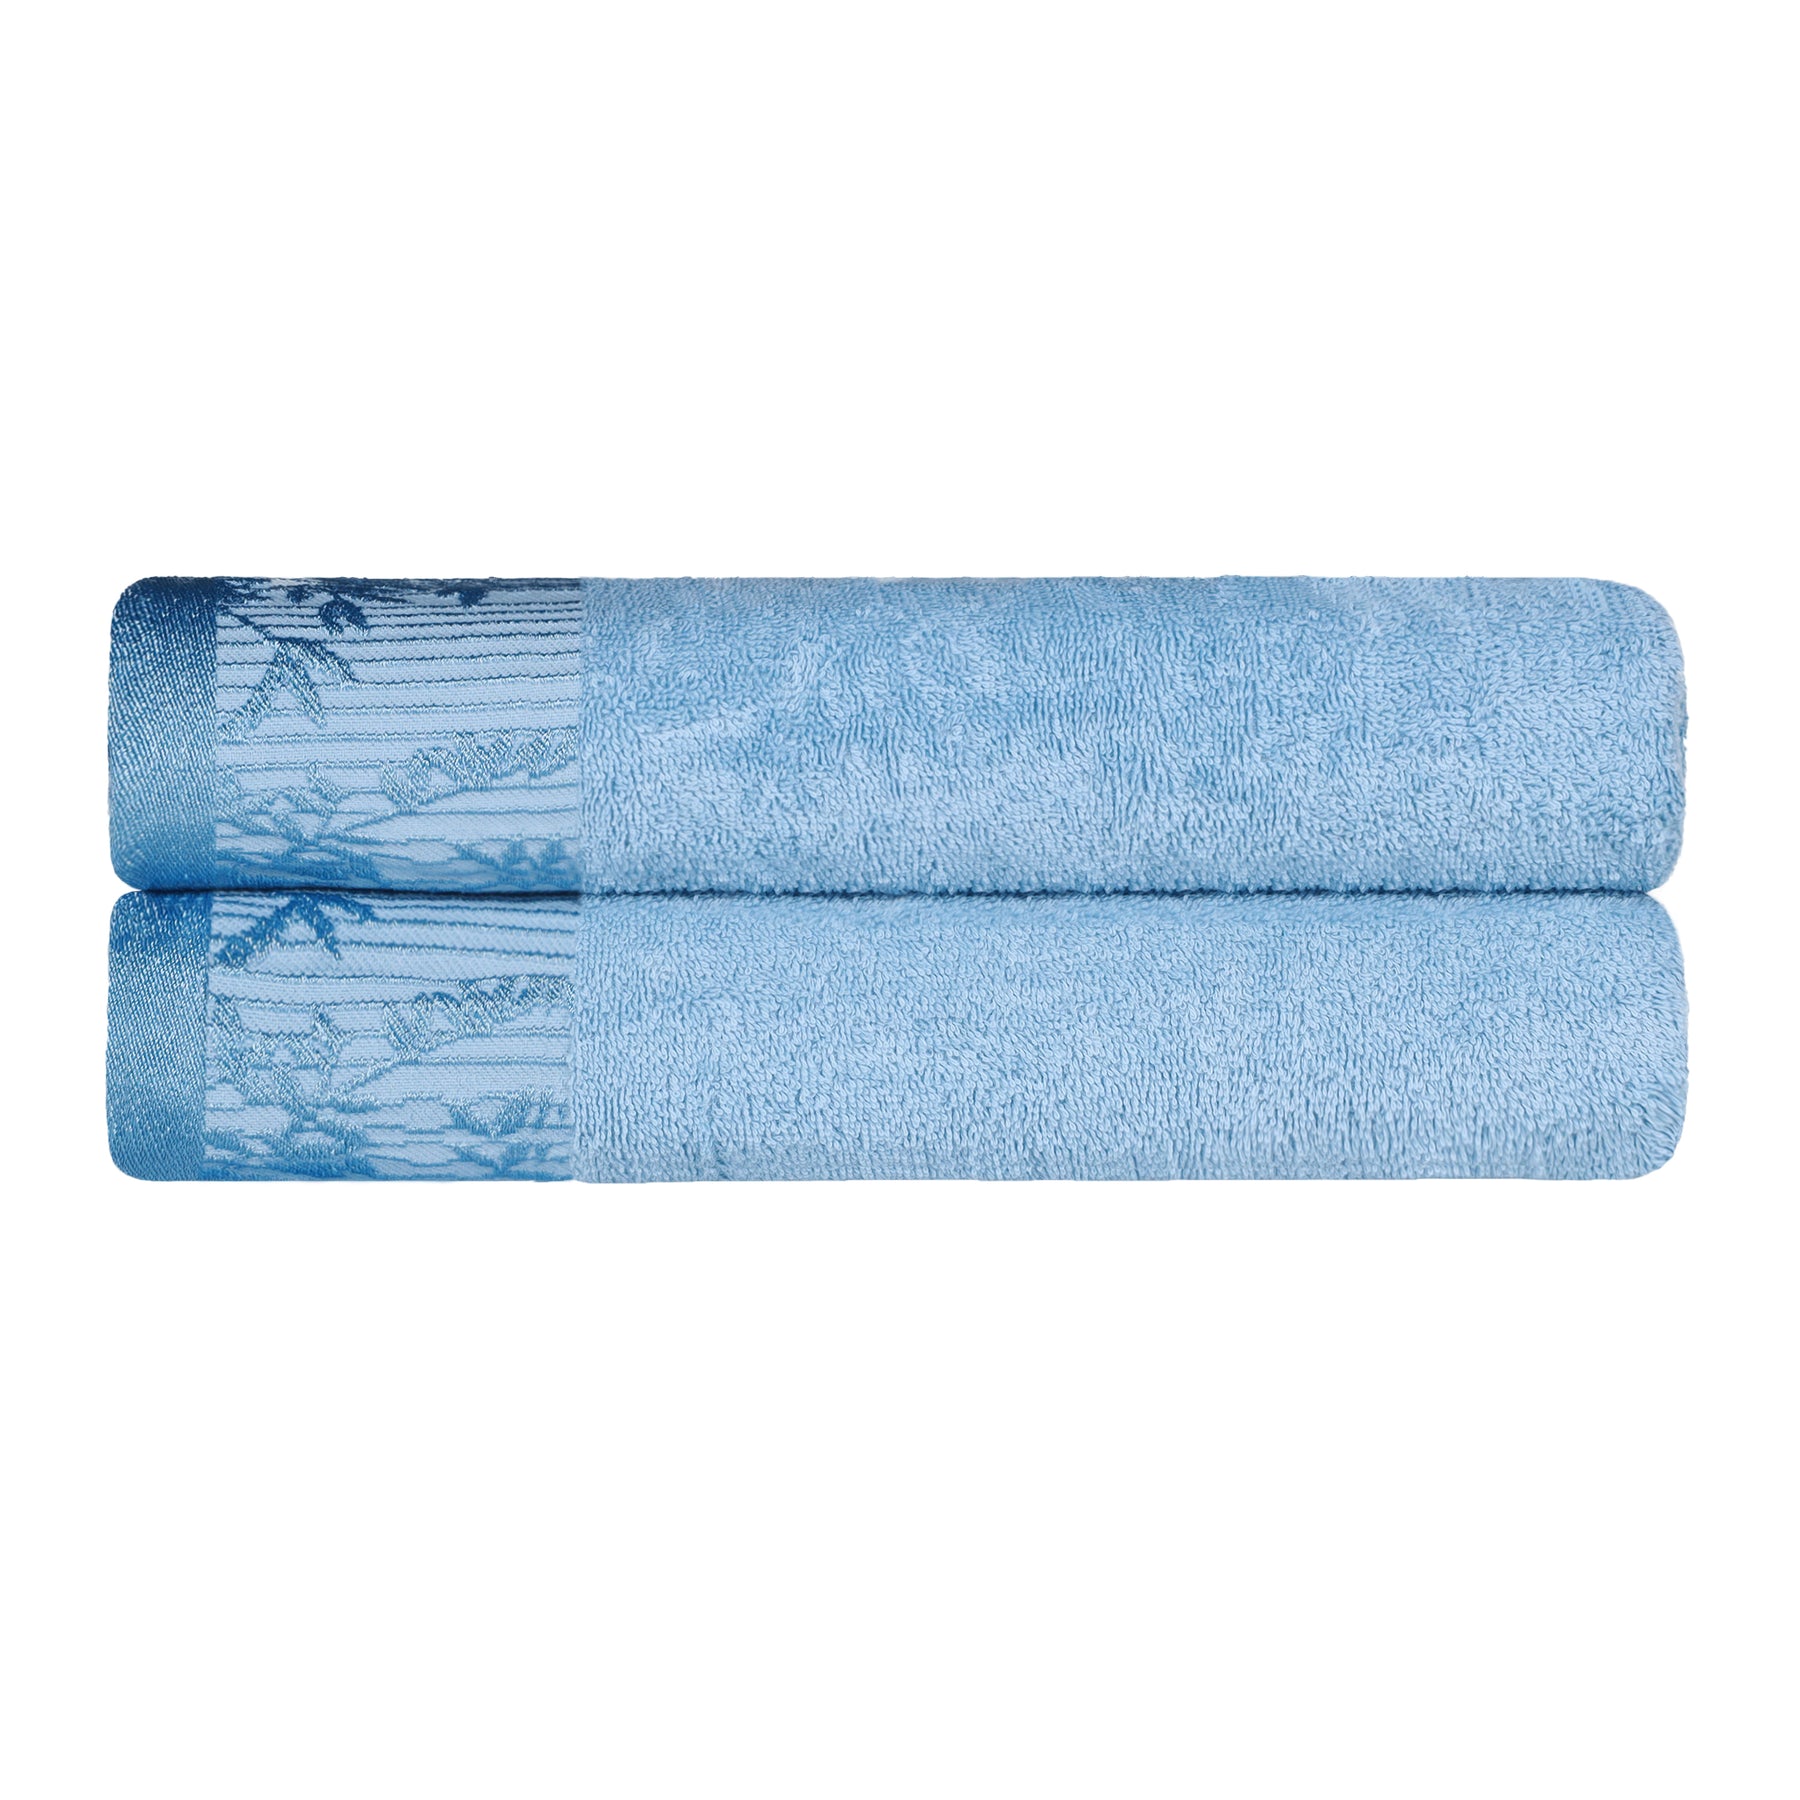 Superior Wisteria Cotton Floral Jacquard Border Bath Towels  - Waterfall